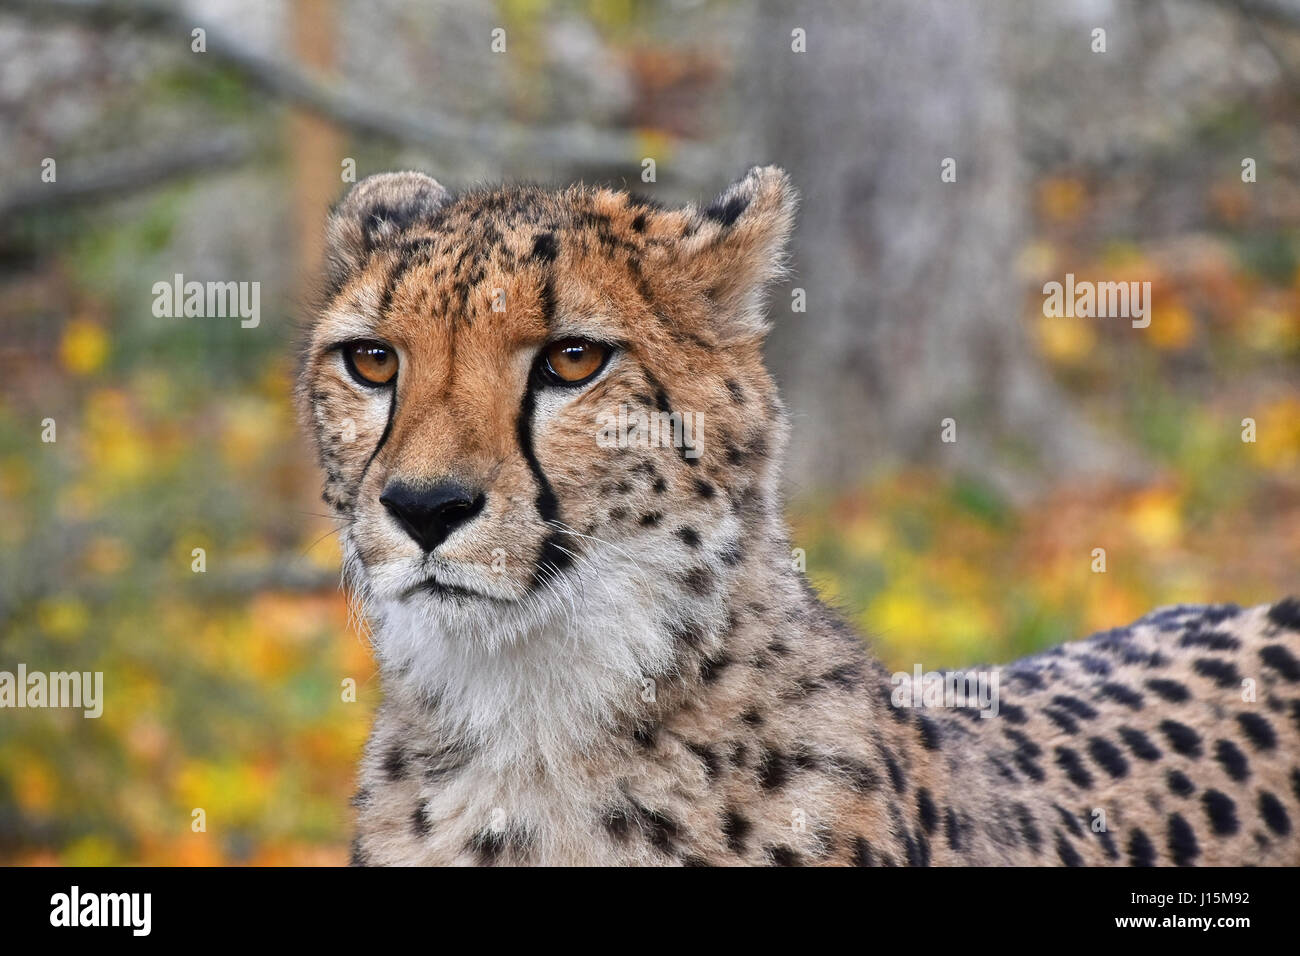 Close up front view portrait of cheetah (Acinonyx jubatus) looking at camera, low angle view Stock Photo